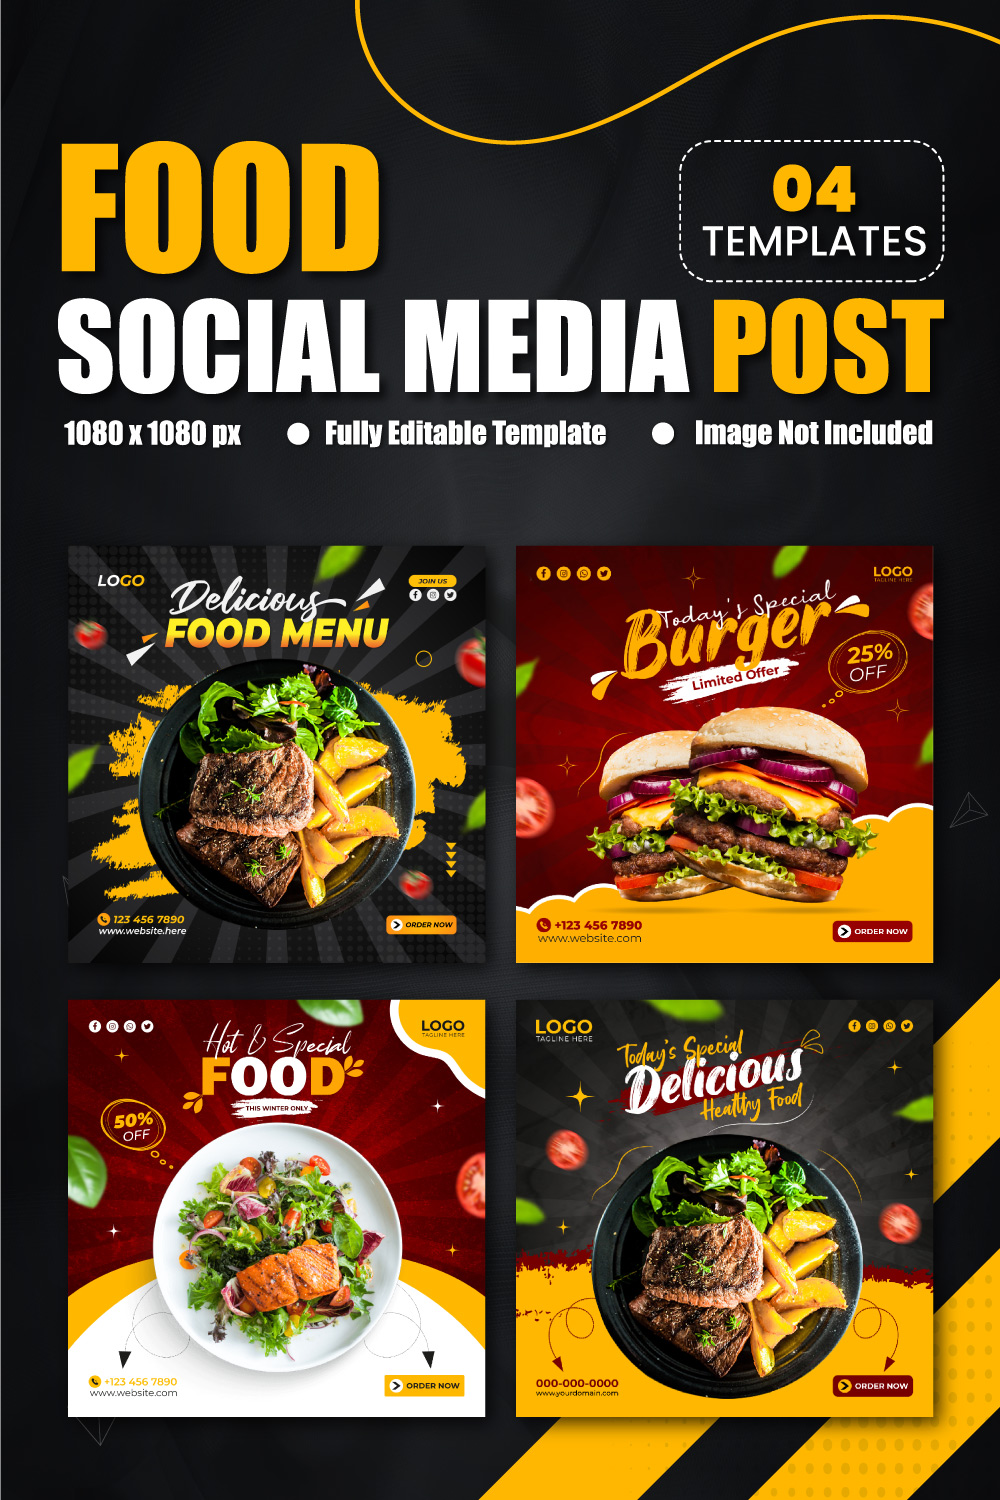 Food Social Media Promotional Post & Instagram Banner Design Template for Restaurant Business 4 Set pinterest preview image.